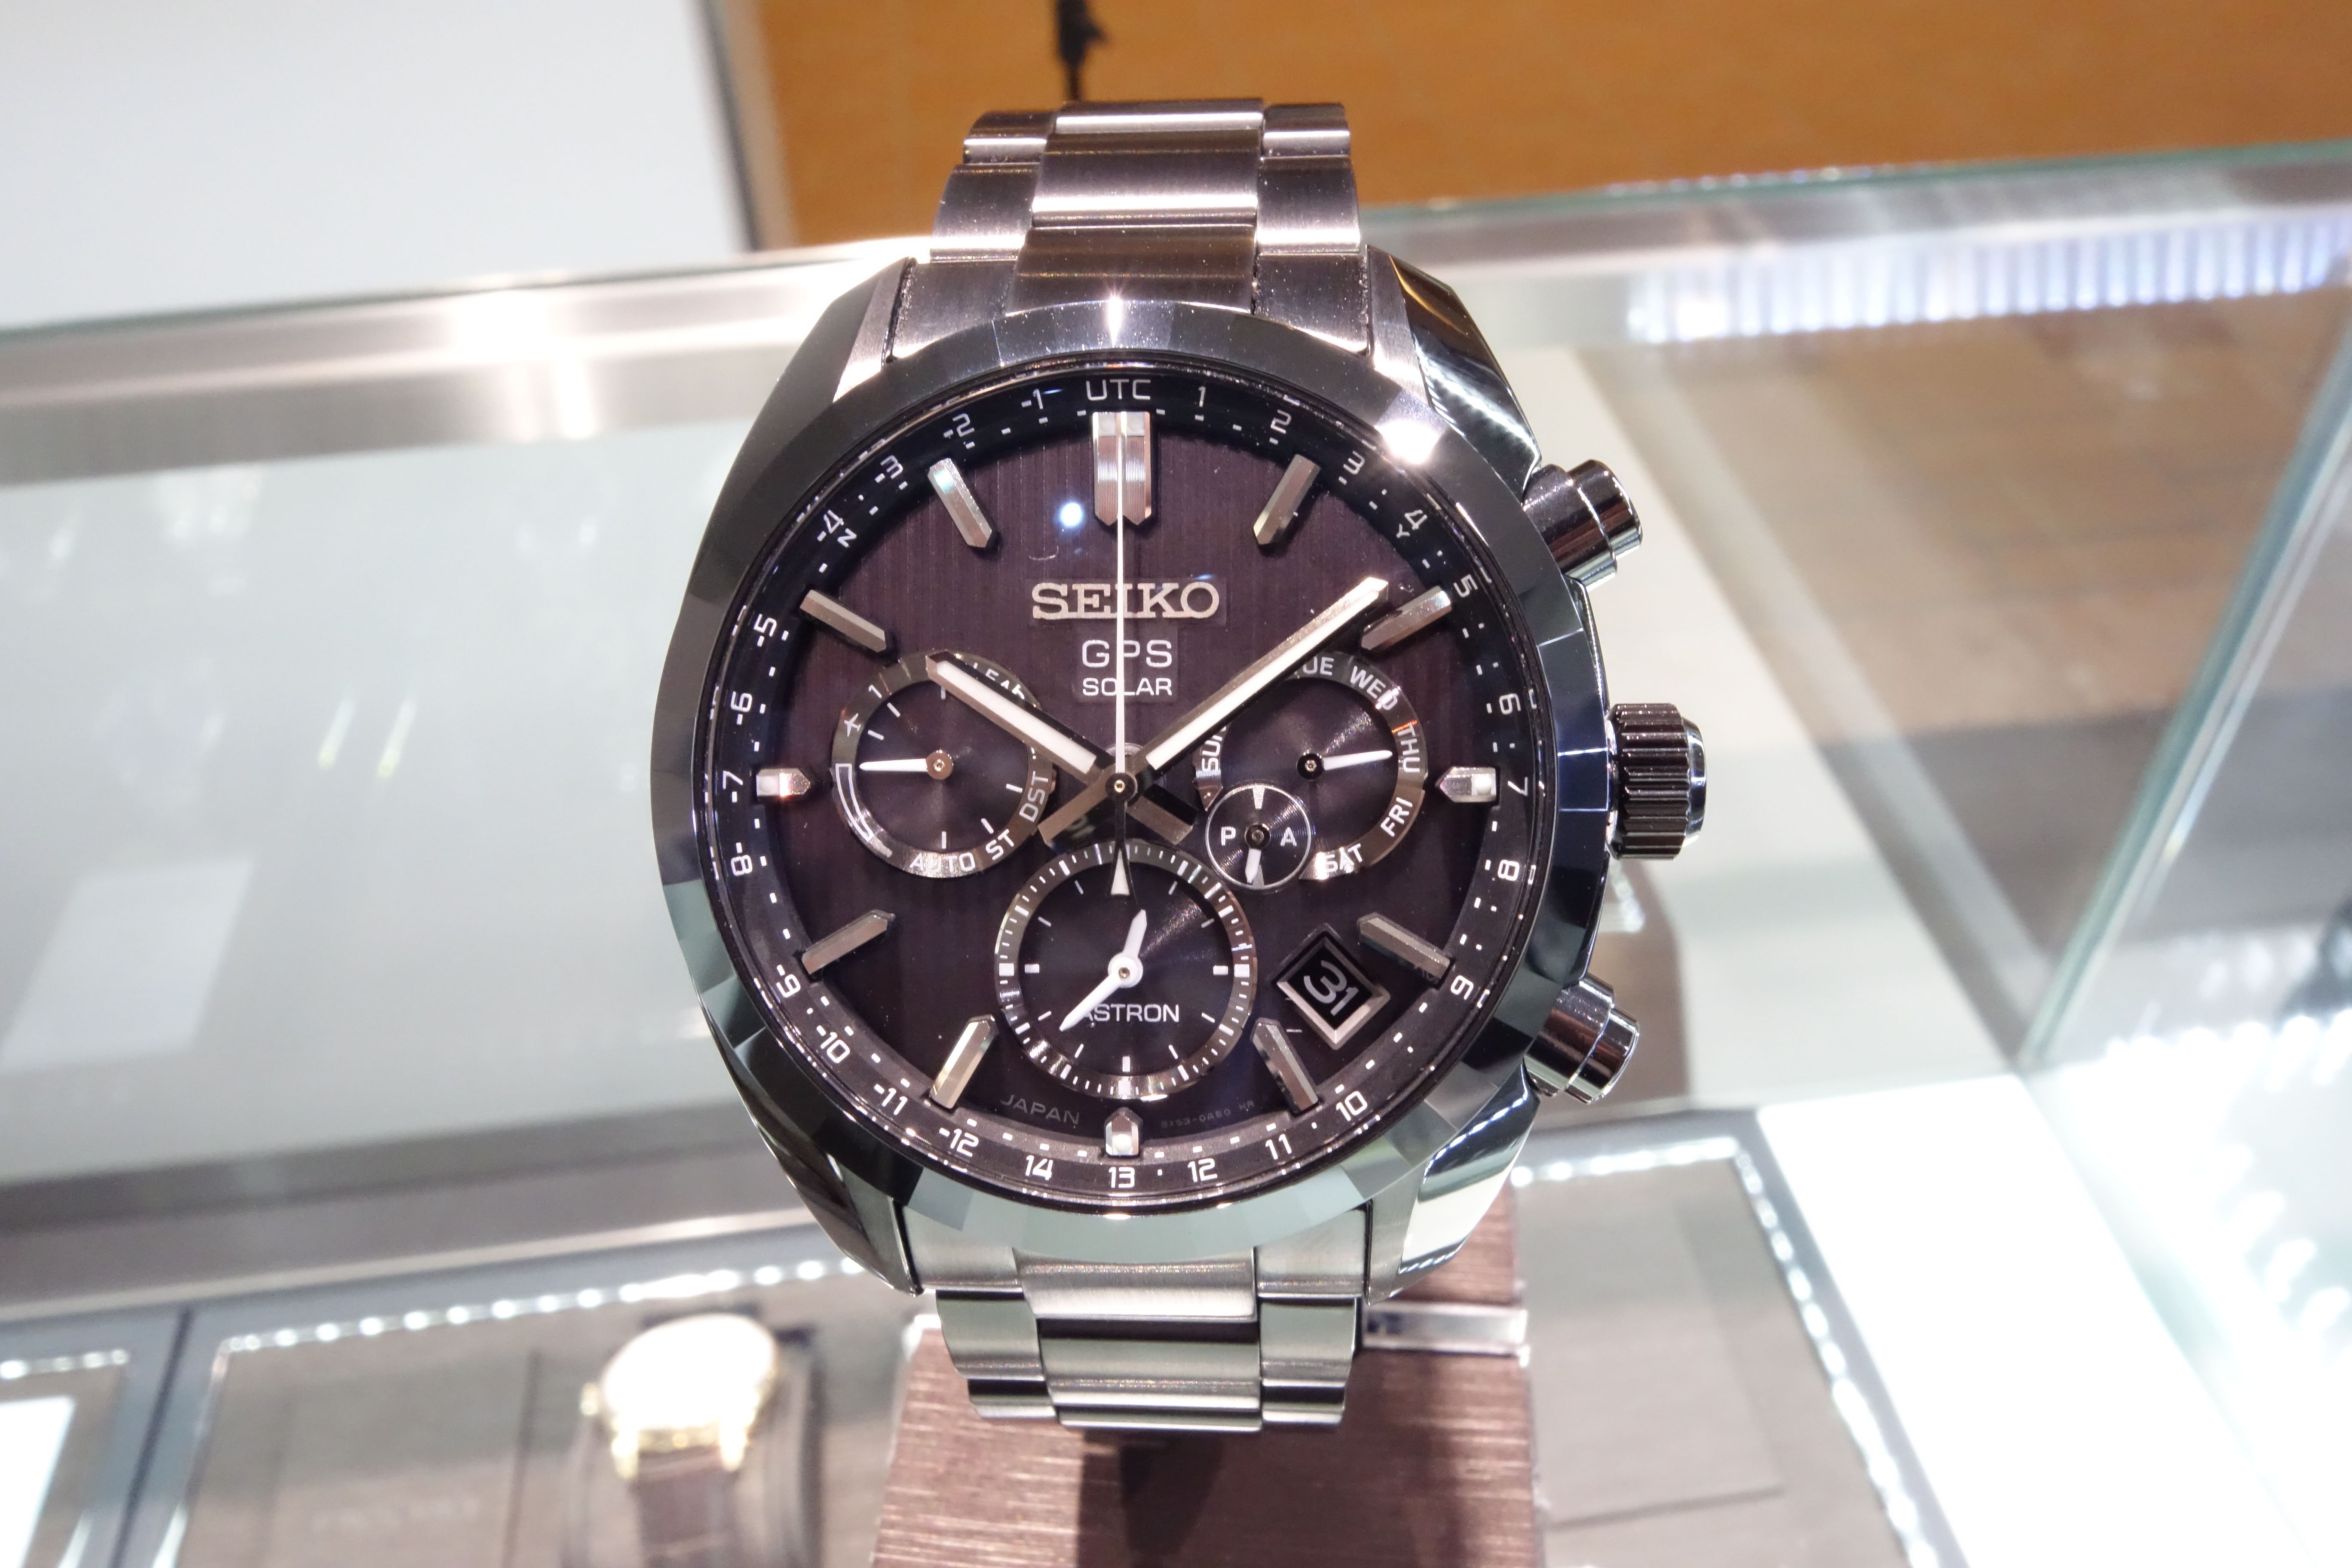 SEIKO ASTRON SBXC023 腕時計のNEEL横浜ランドマークタワー店